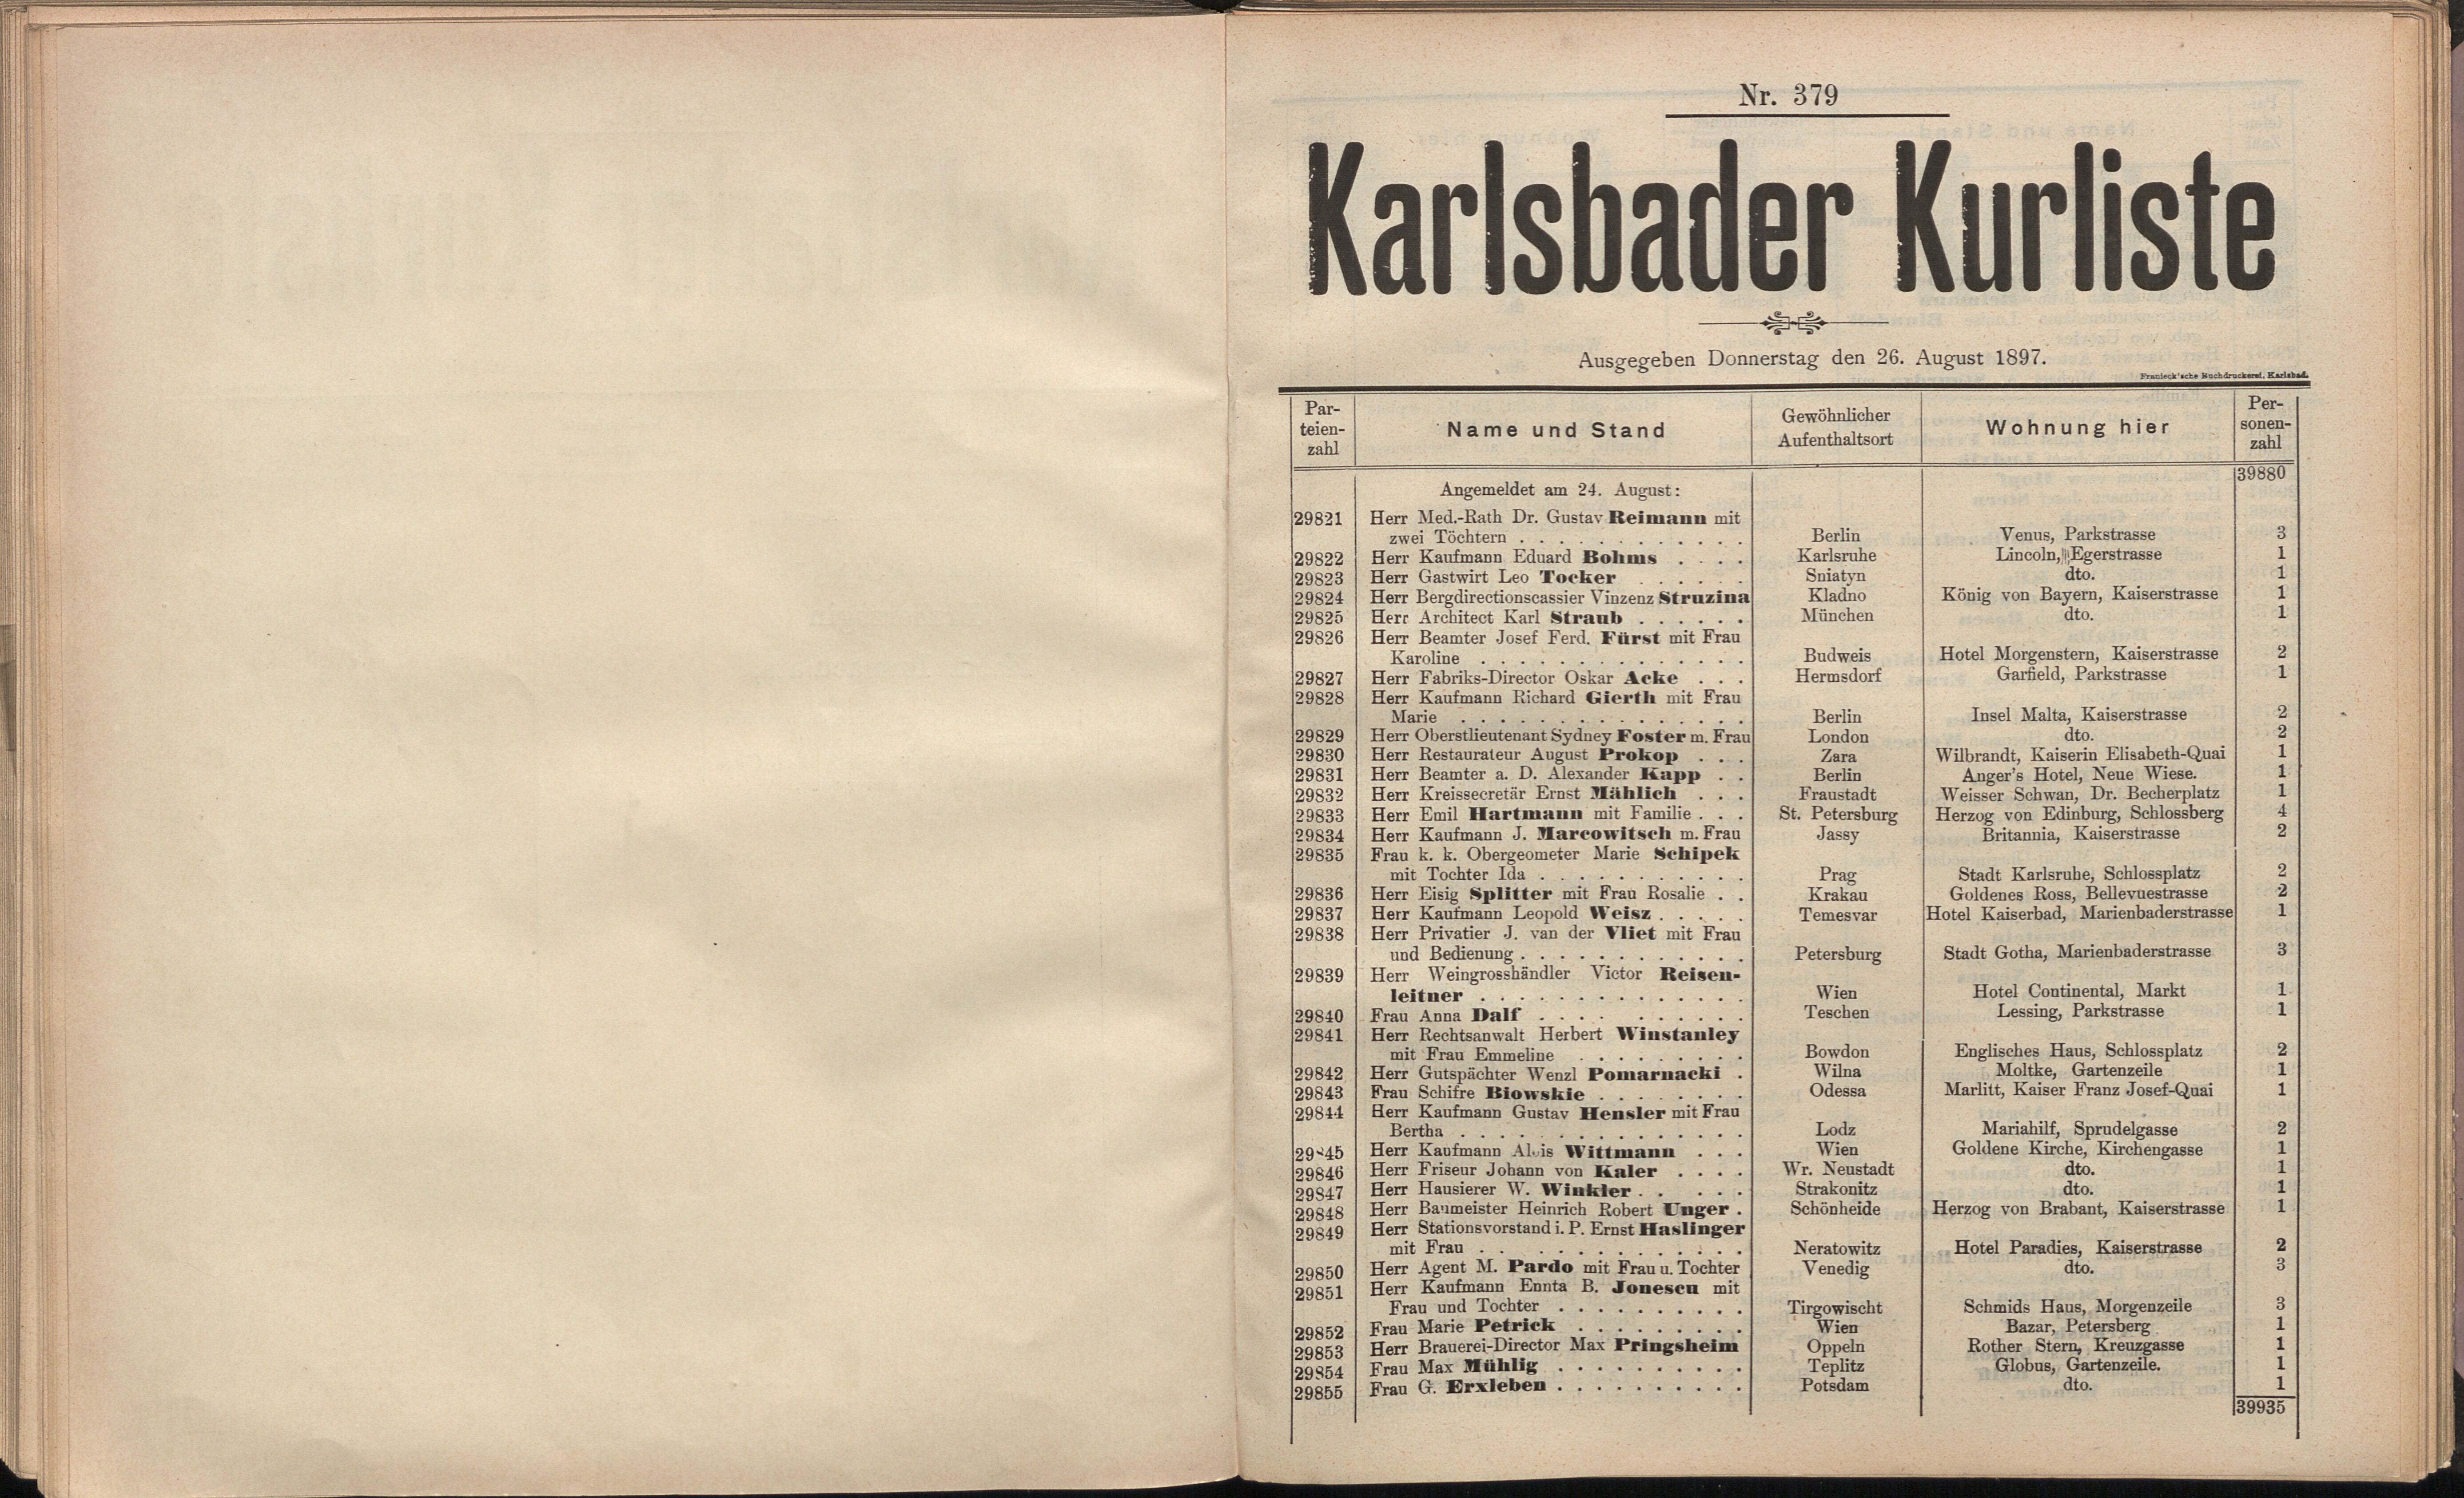 399. soap-kv_knihovna_karlsbader-kurliste-1897_4000